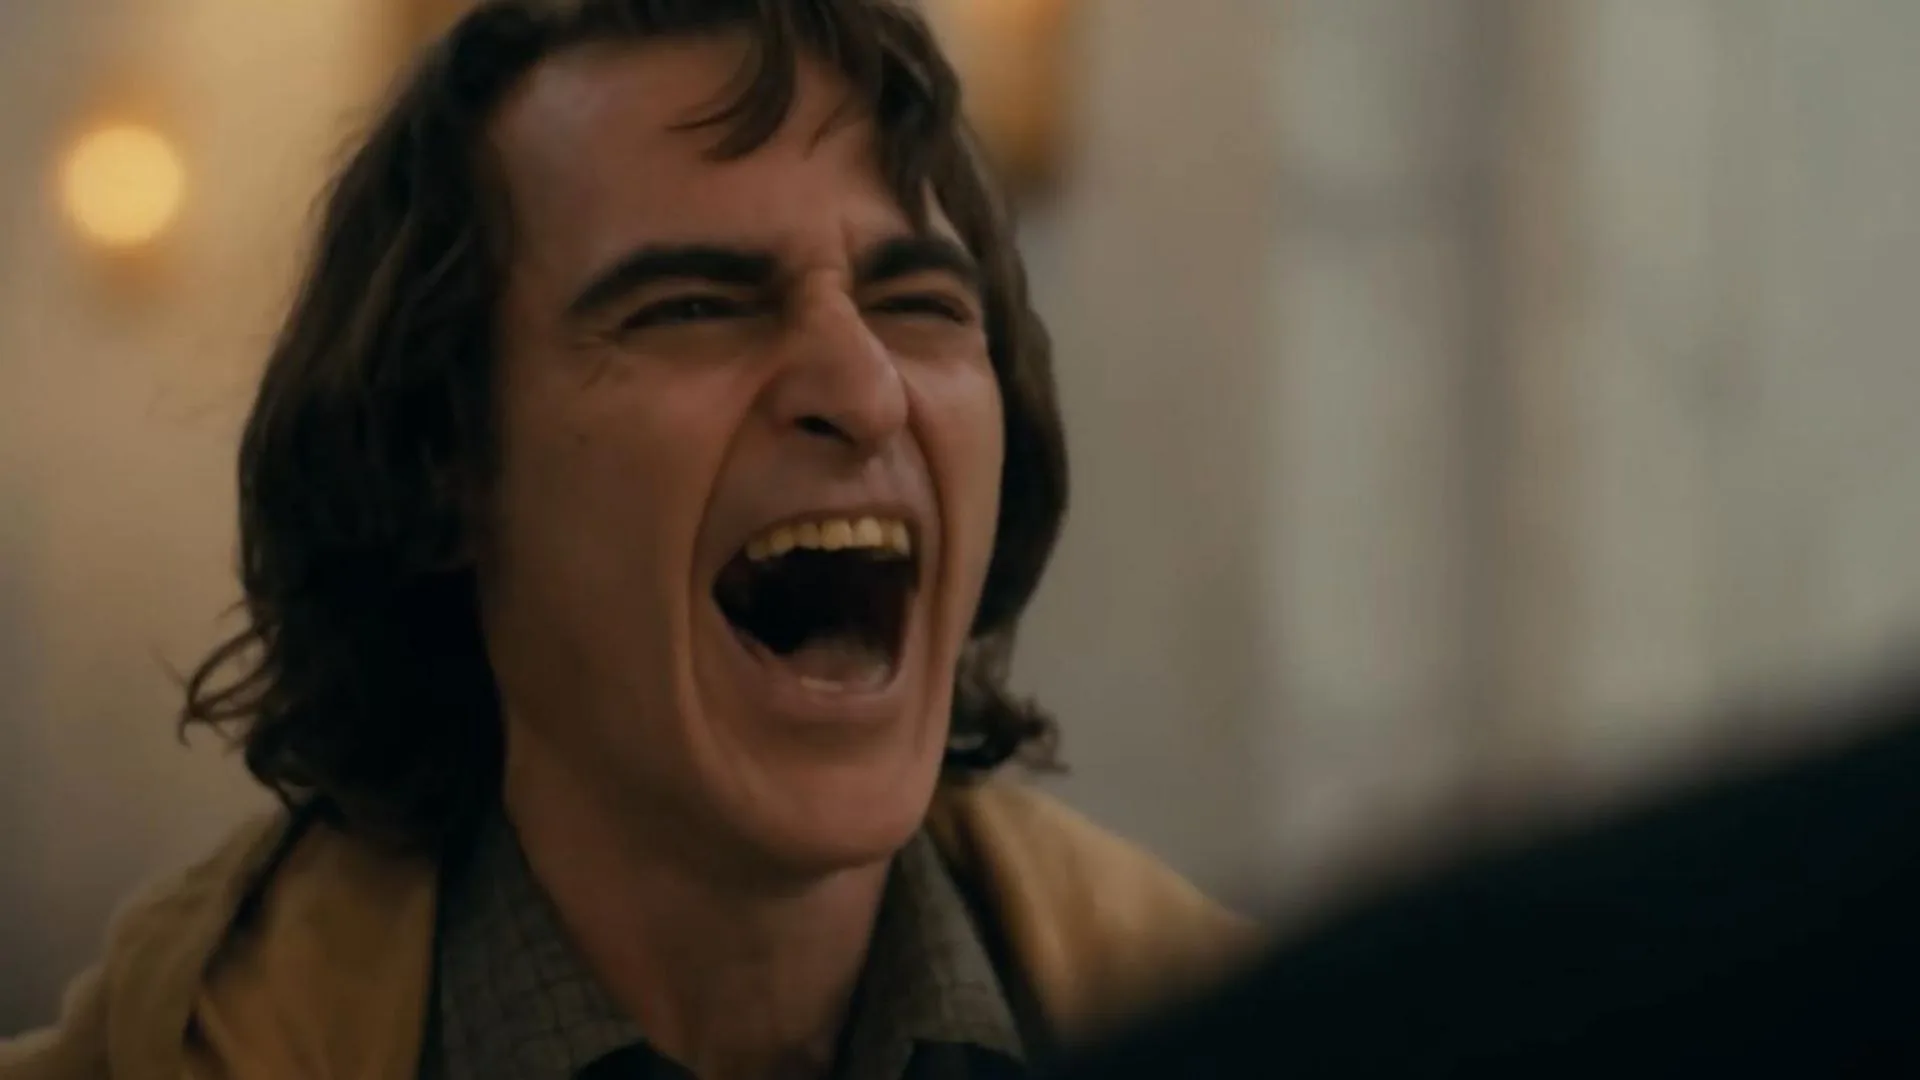 El origen de la risa de Joker de Joaquin Phoenix se relaciona a un trastorno patológico